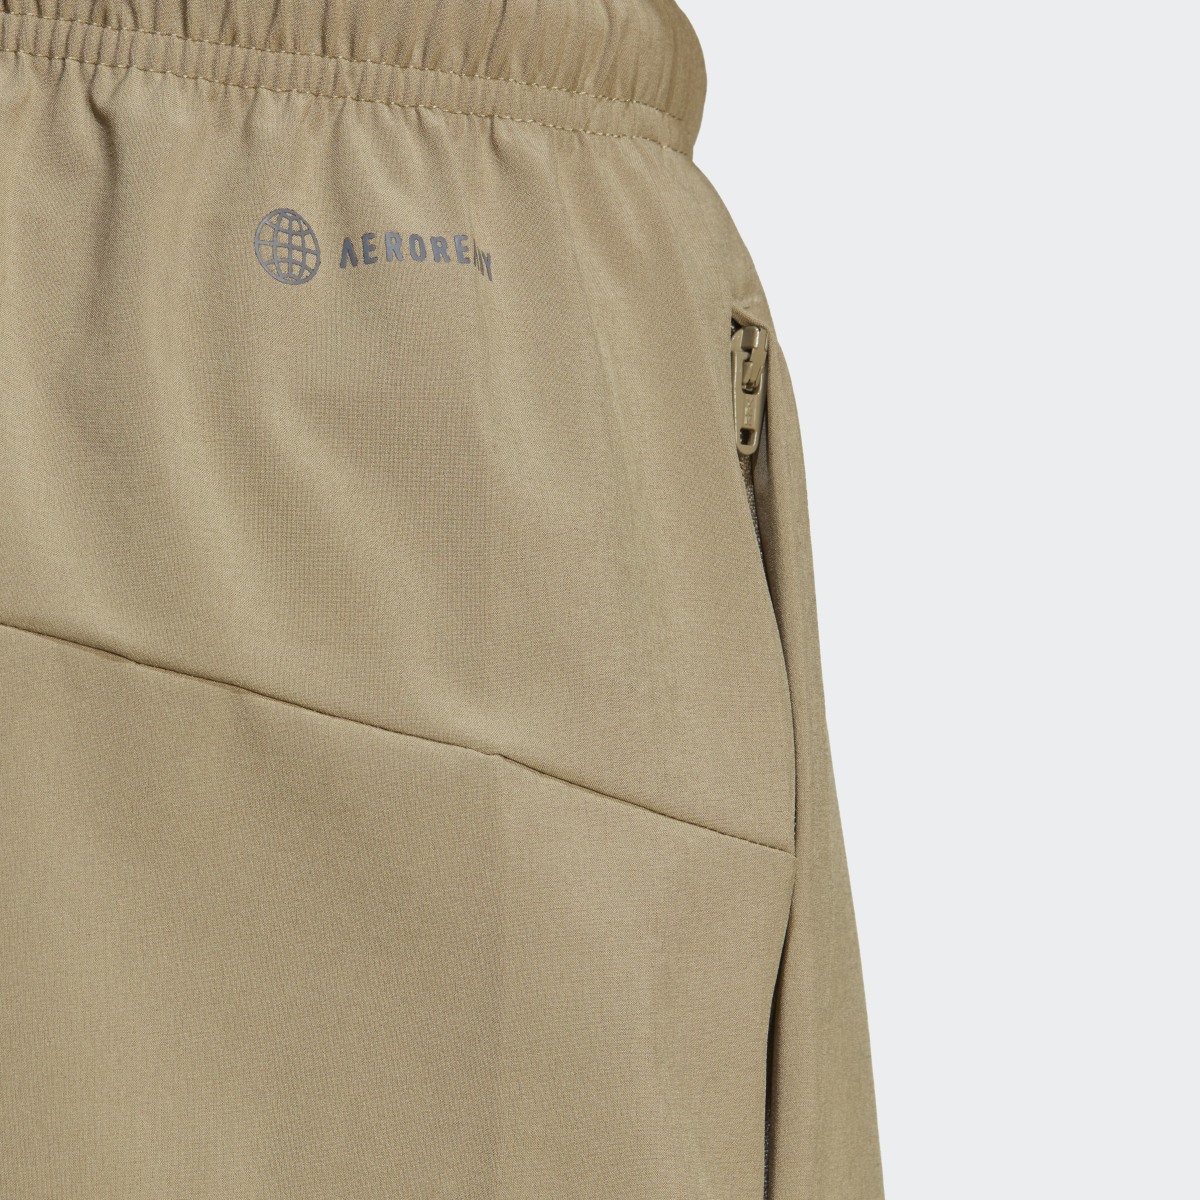 Adidas AlphaStrength Woven Zip Shorts. 6